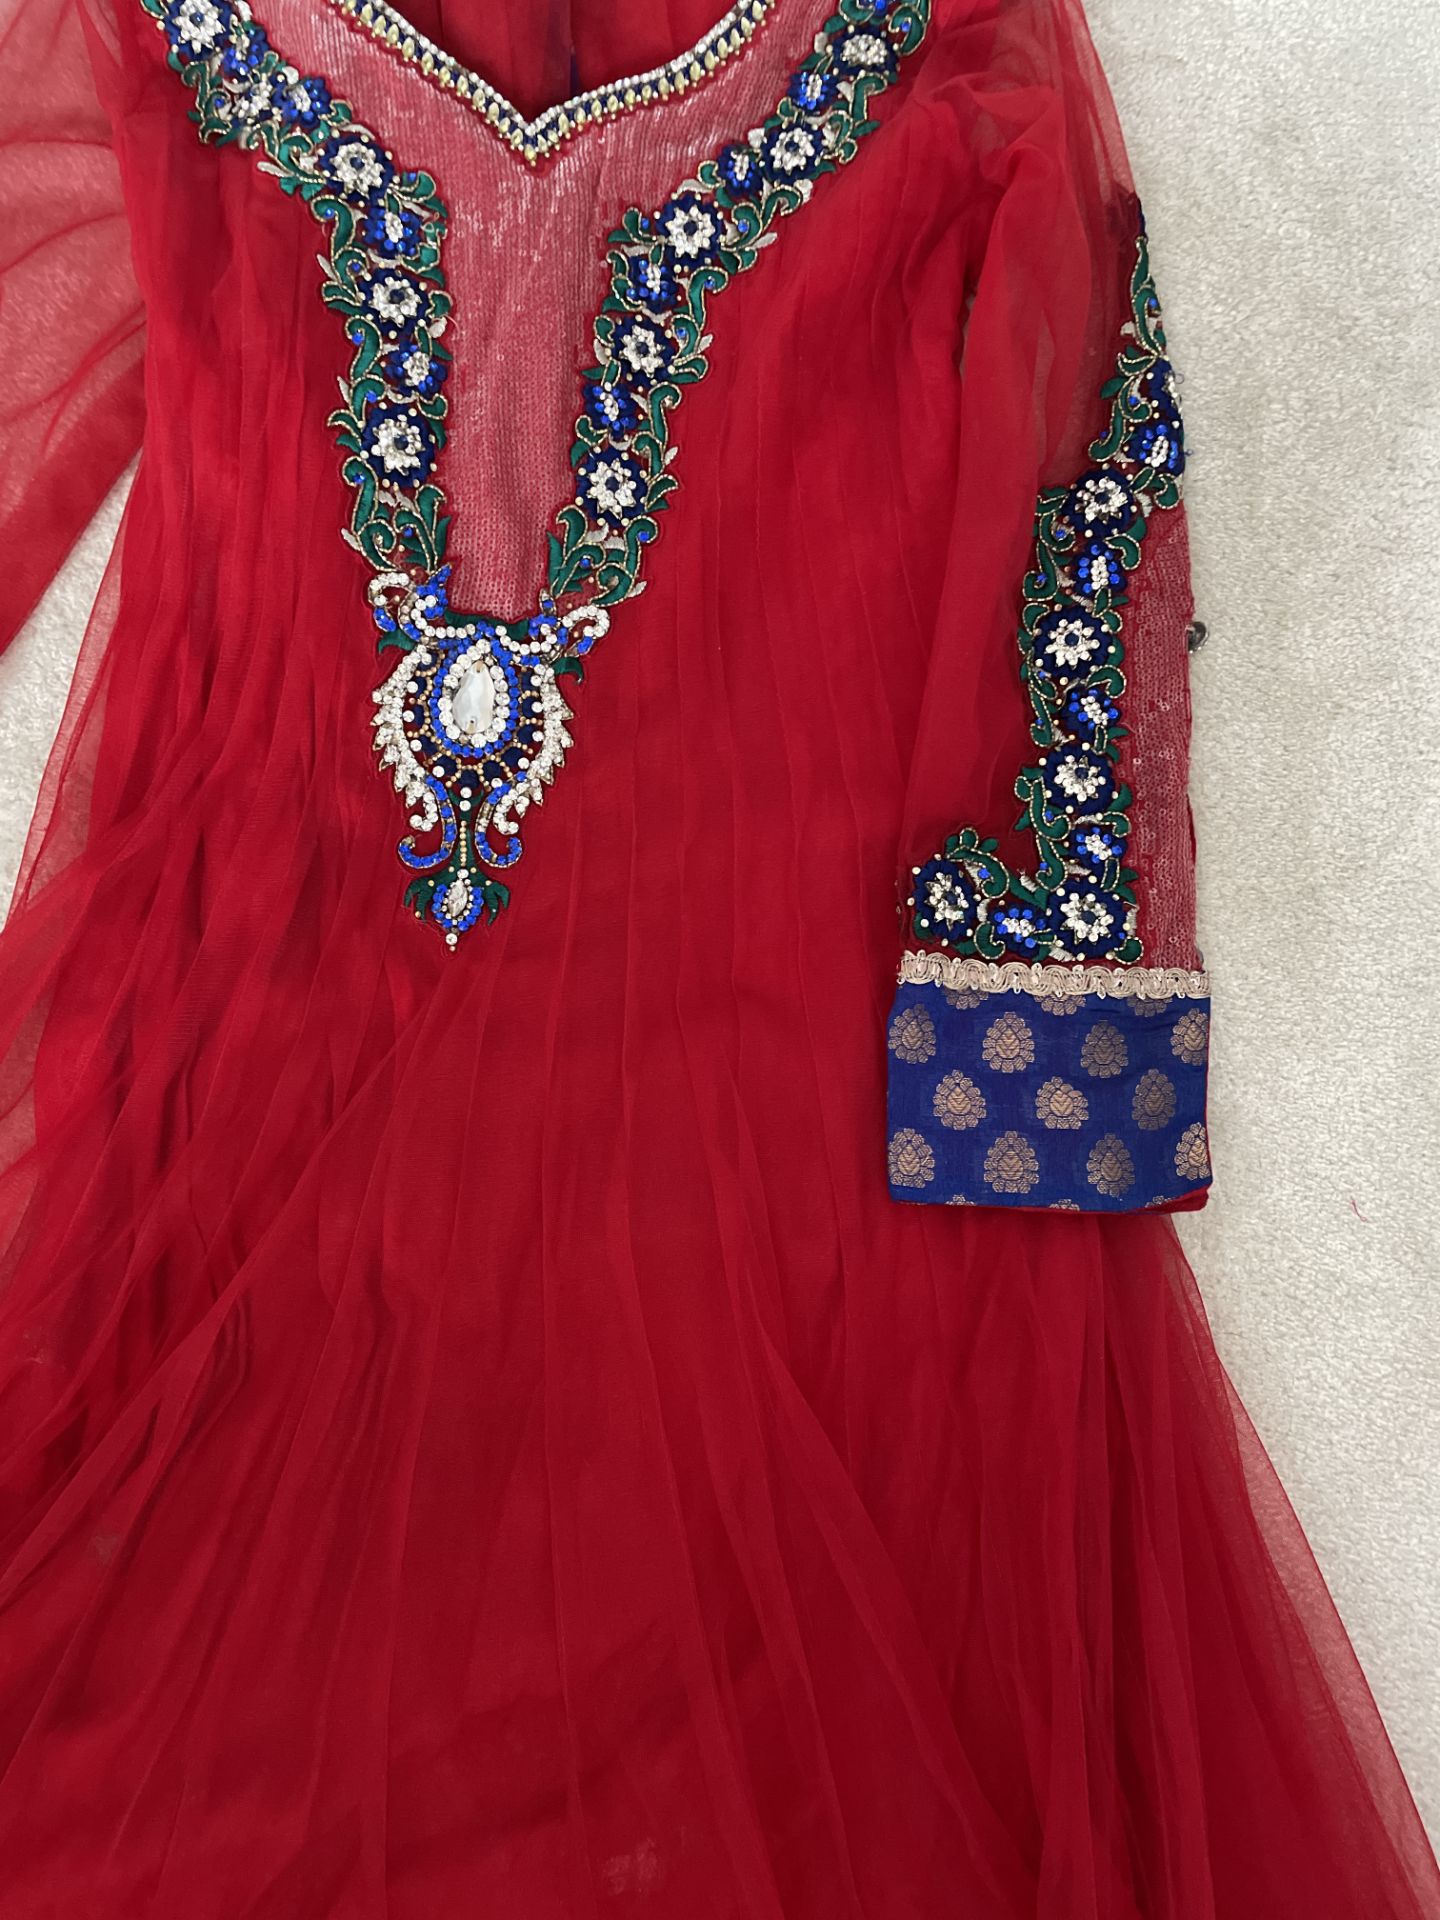 Red And Blue Designer Dress - Image 2 of 4